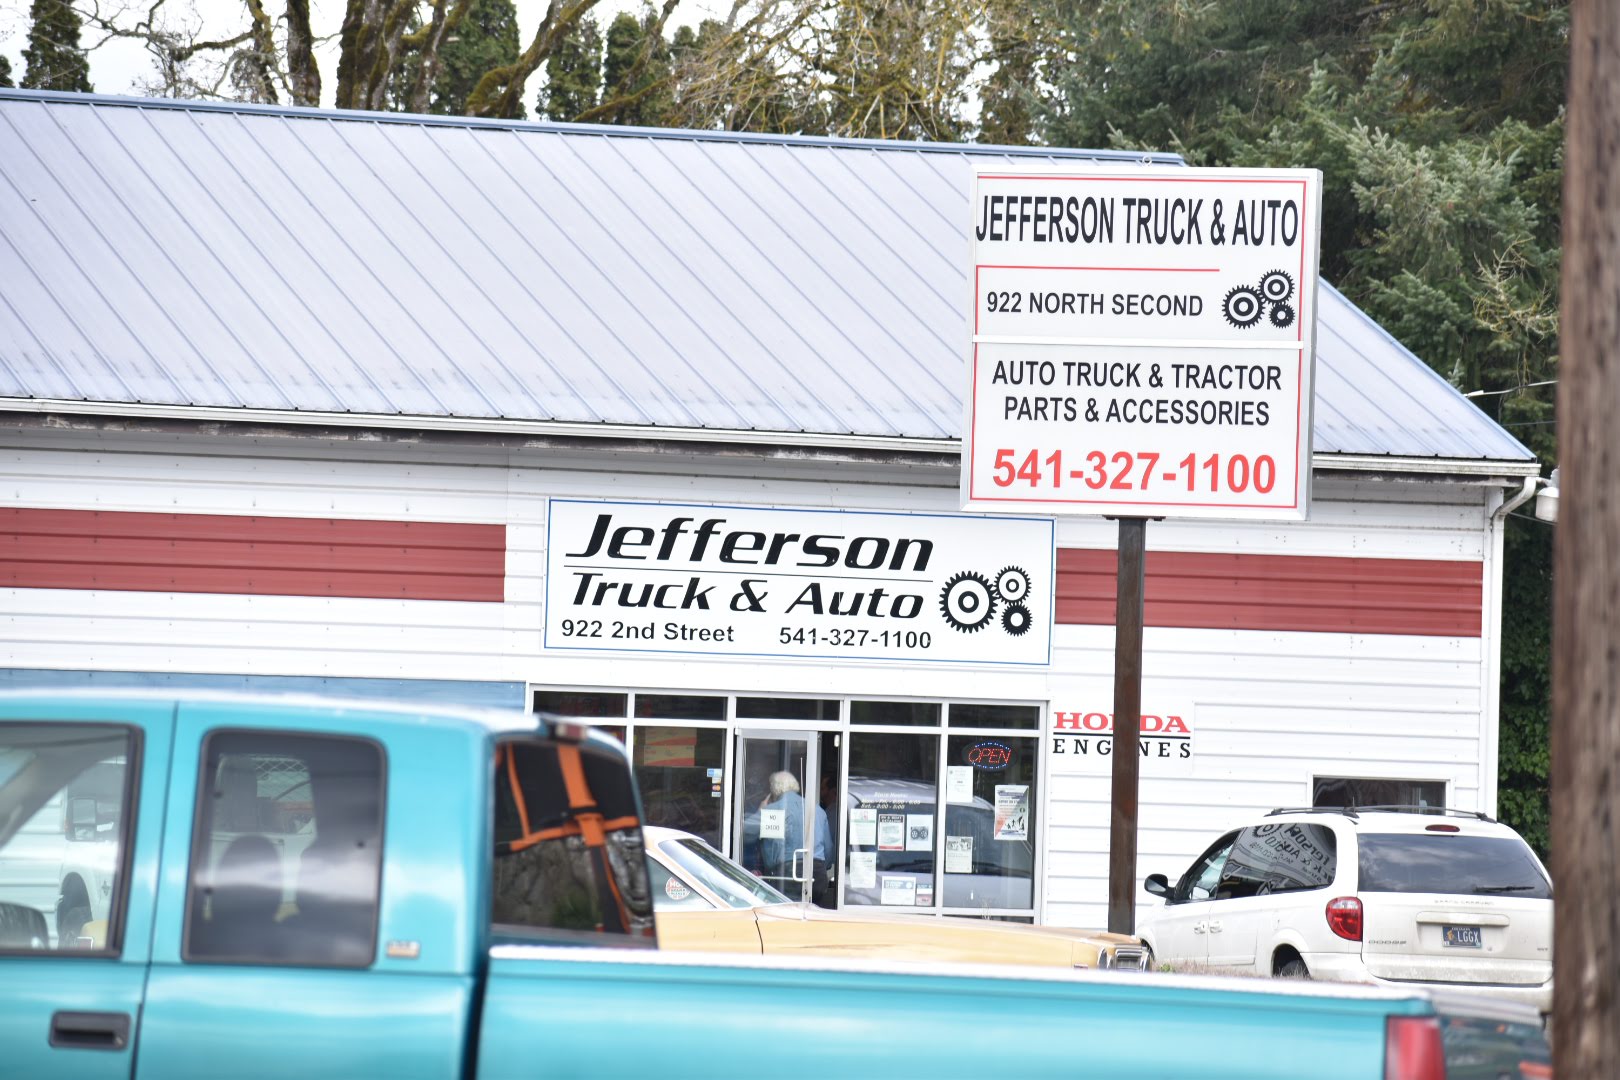 Jefferson Truck & Auto